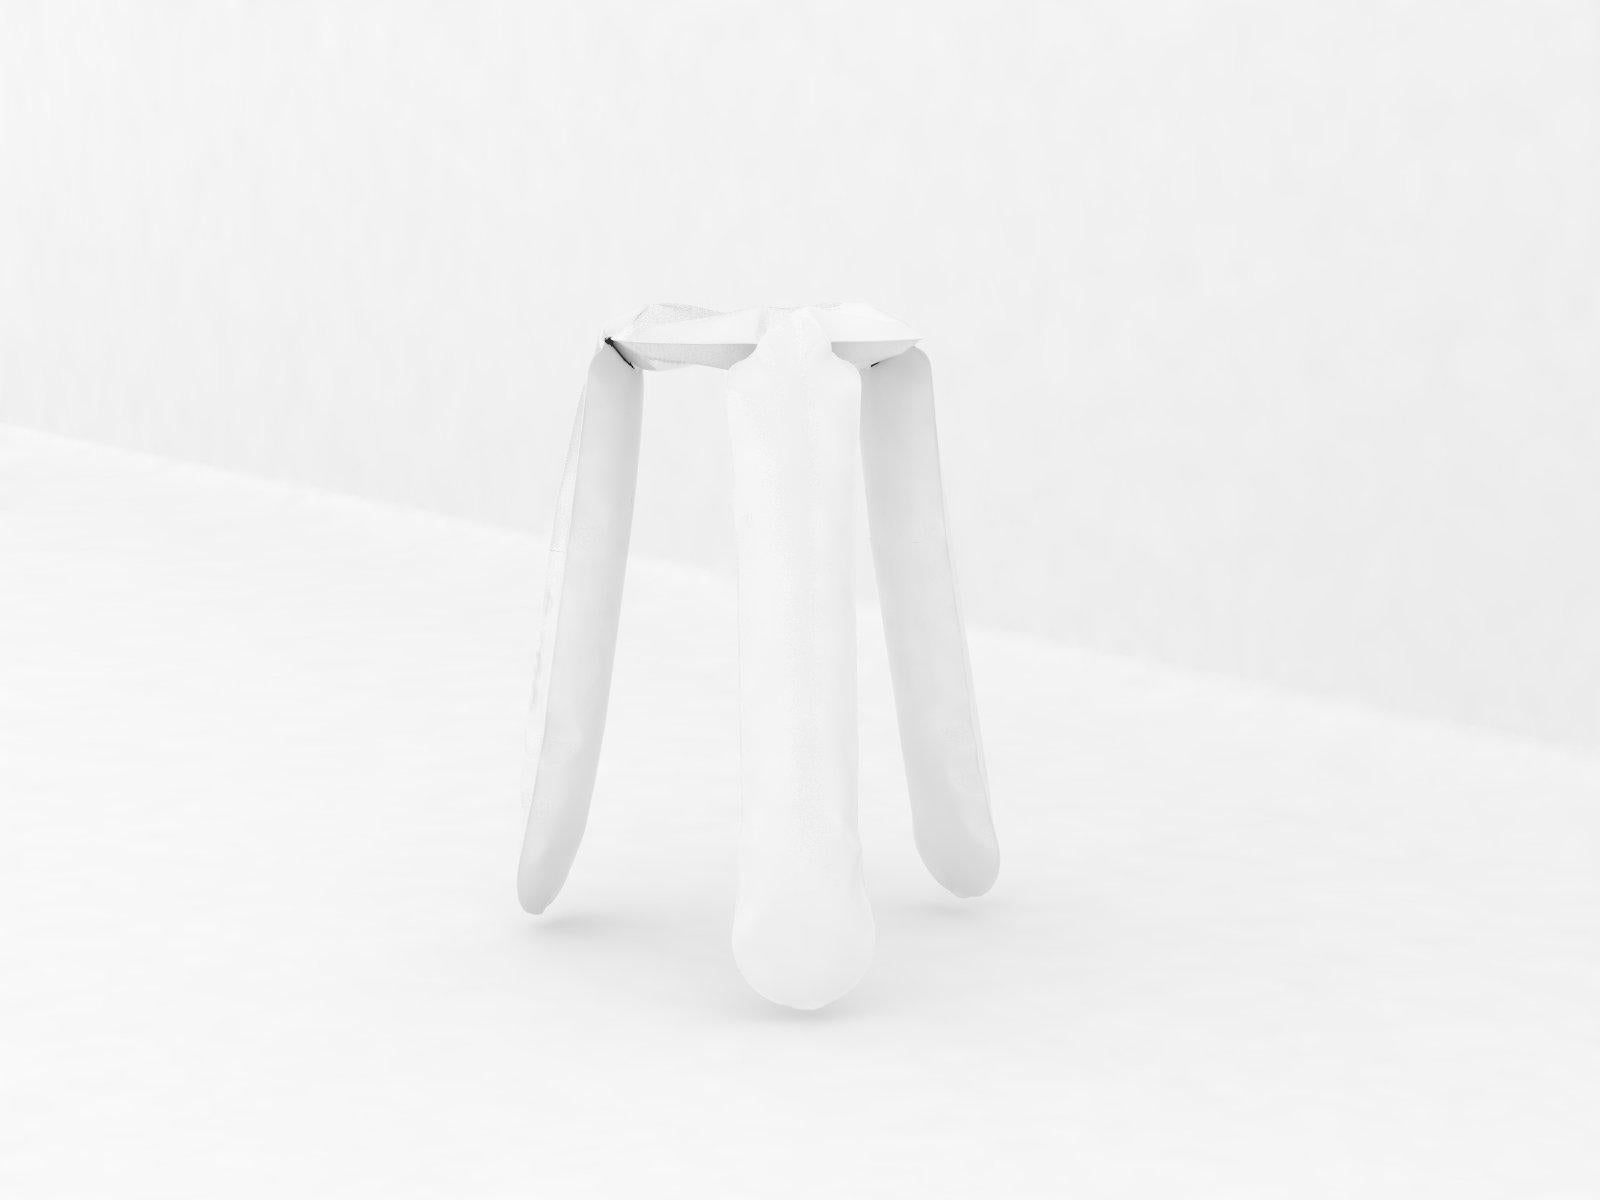 Plopp Stool 'Kitchen Size' by Zieta Prozessdesign, Stainless Steel ‘Inox’ In New Condition For Sale In Paris, FR